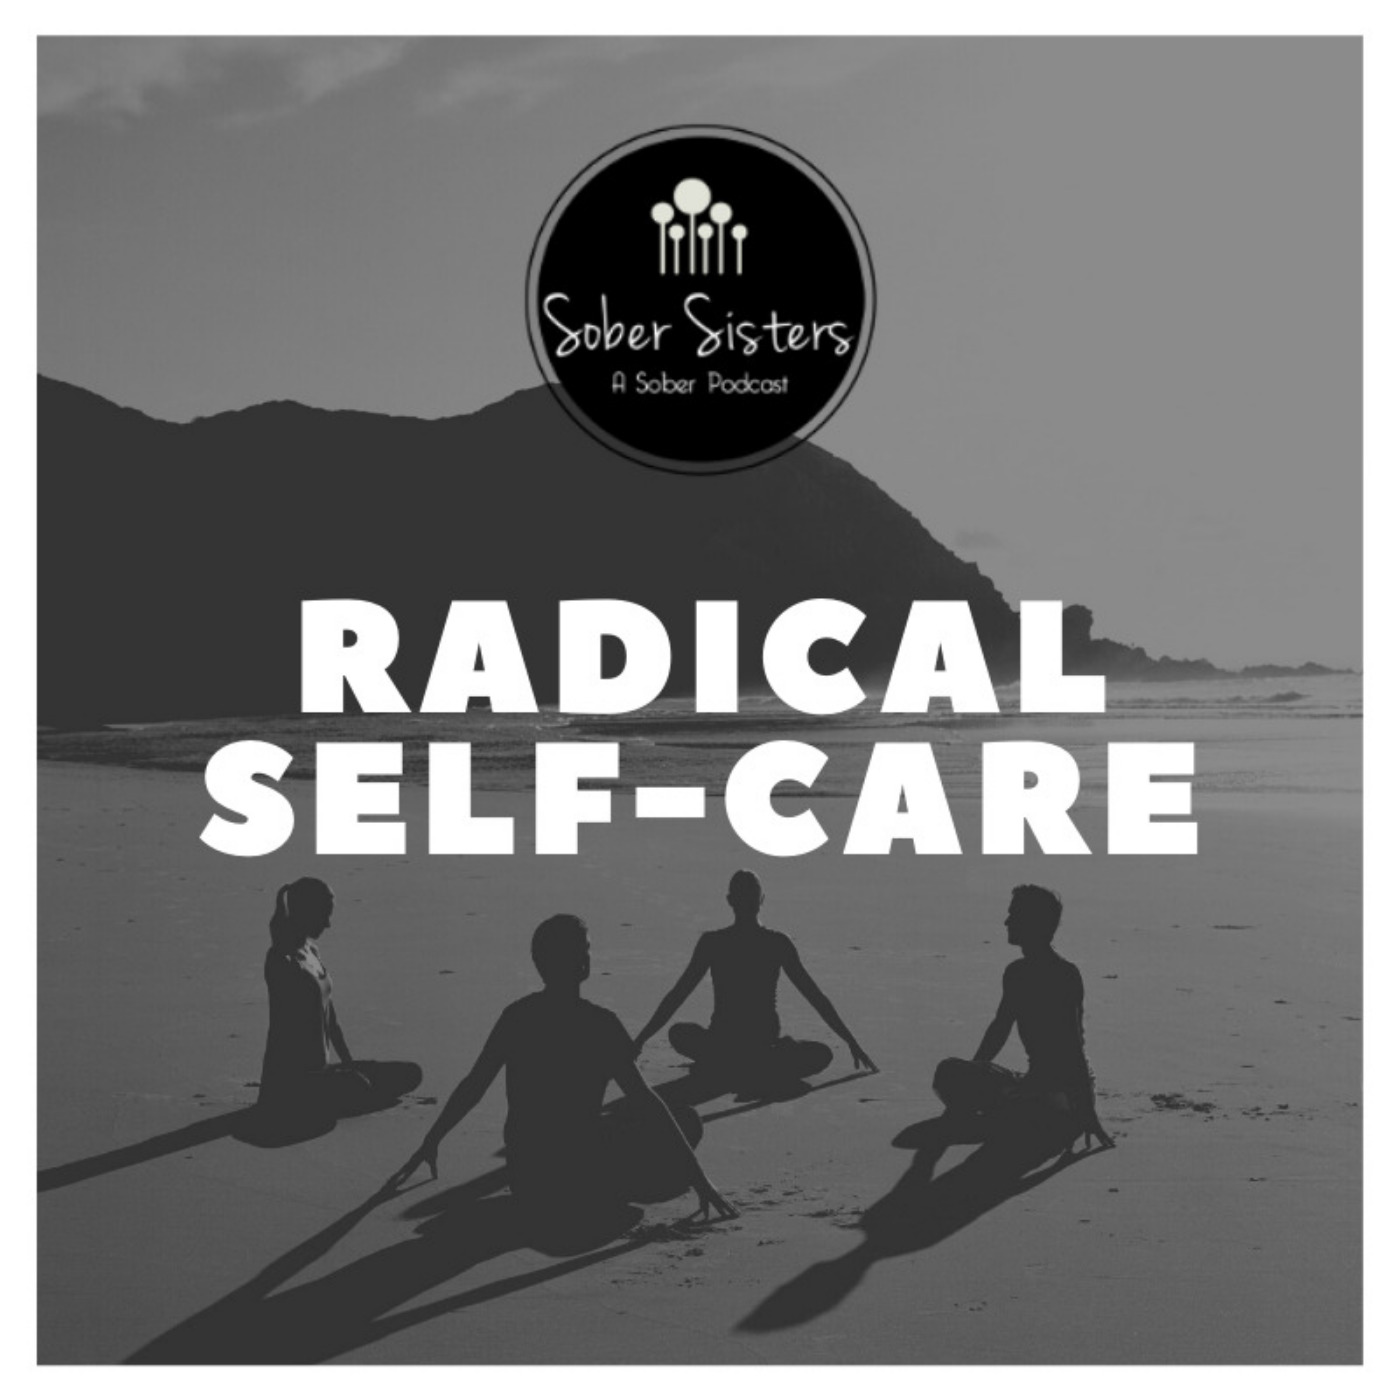 Radical Self Care